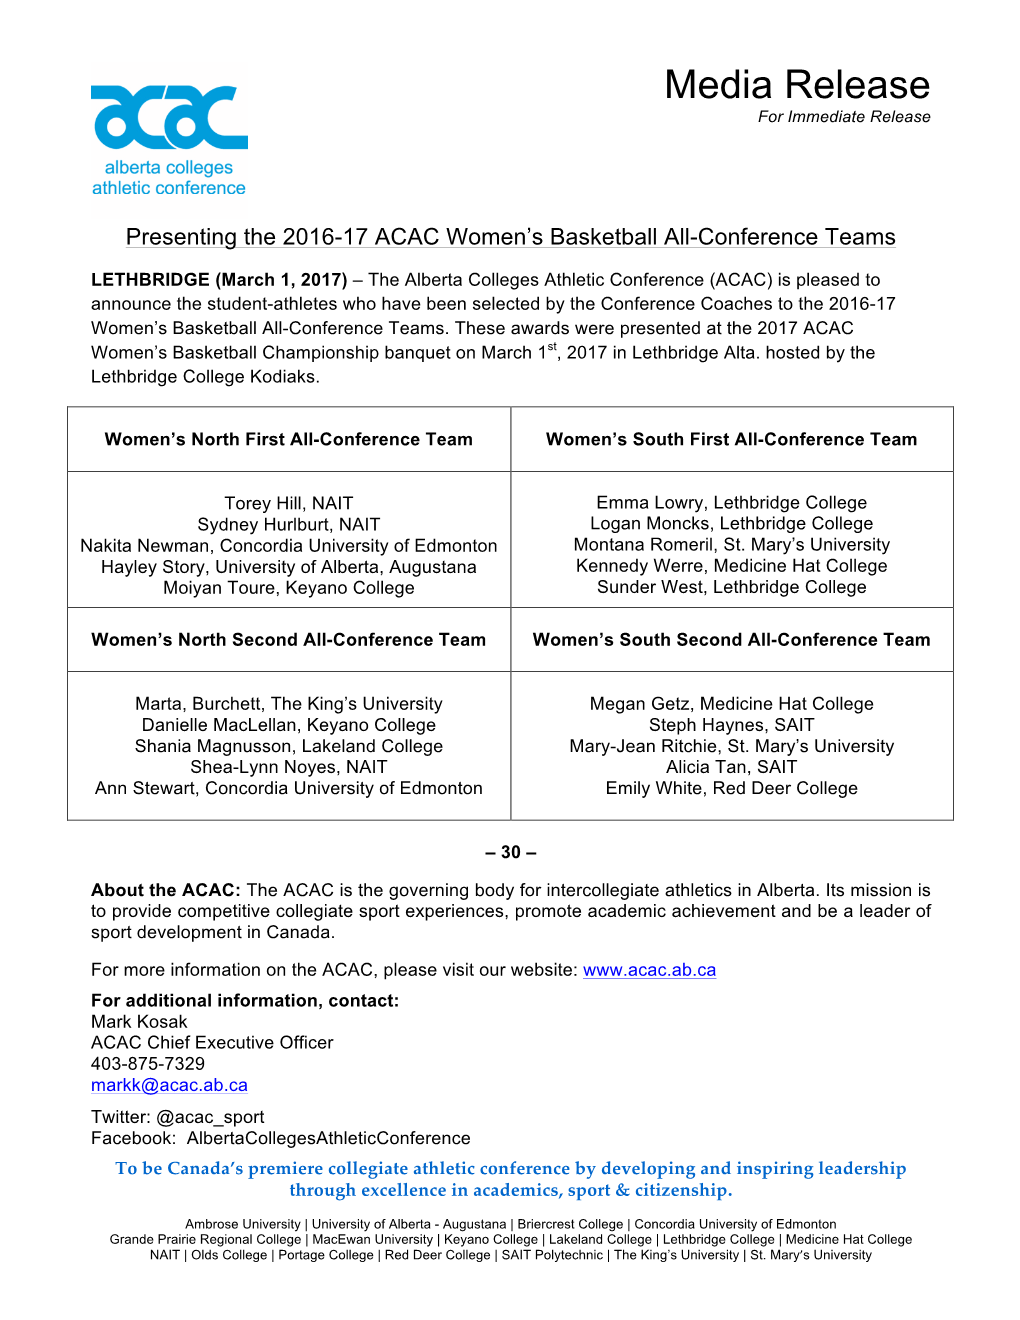 2016-17 ACAC Women's Basketball